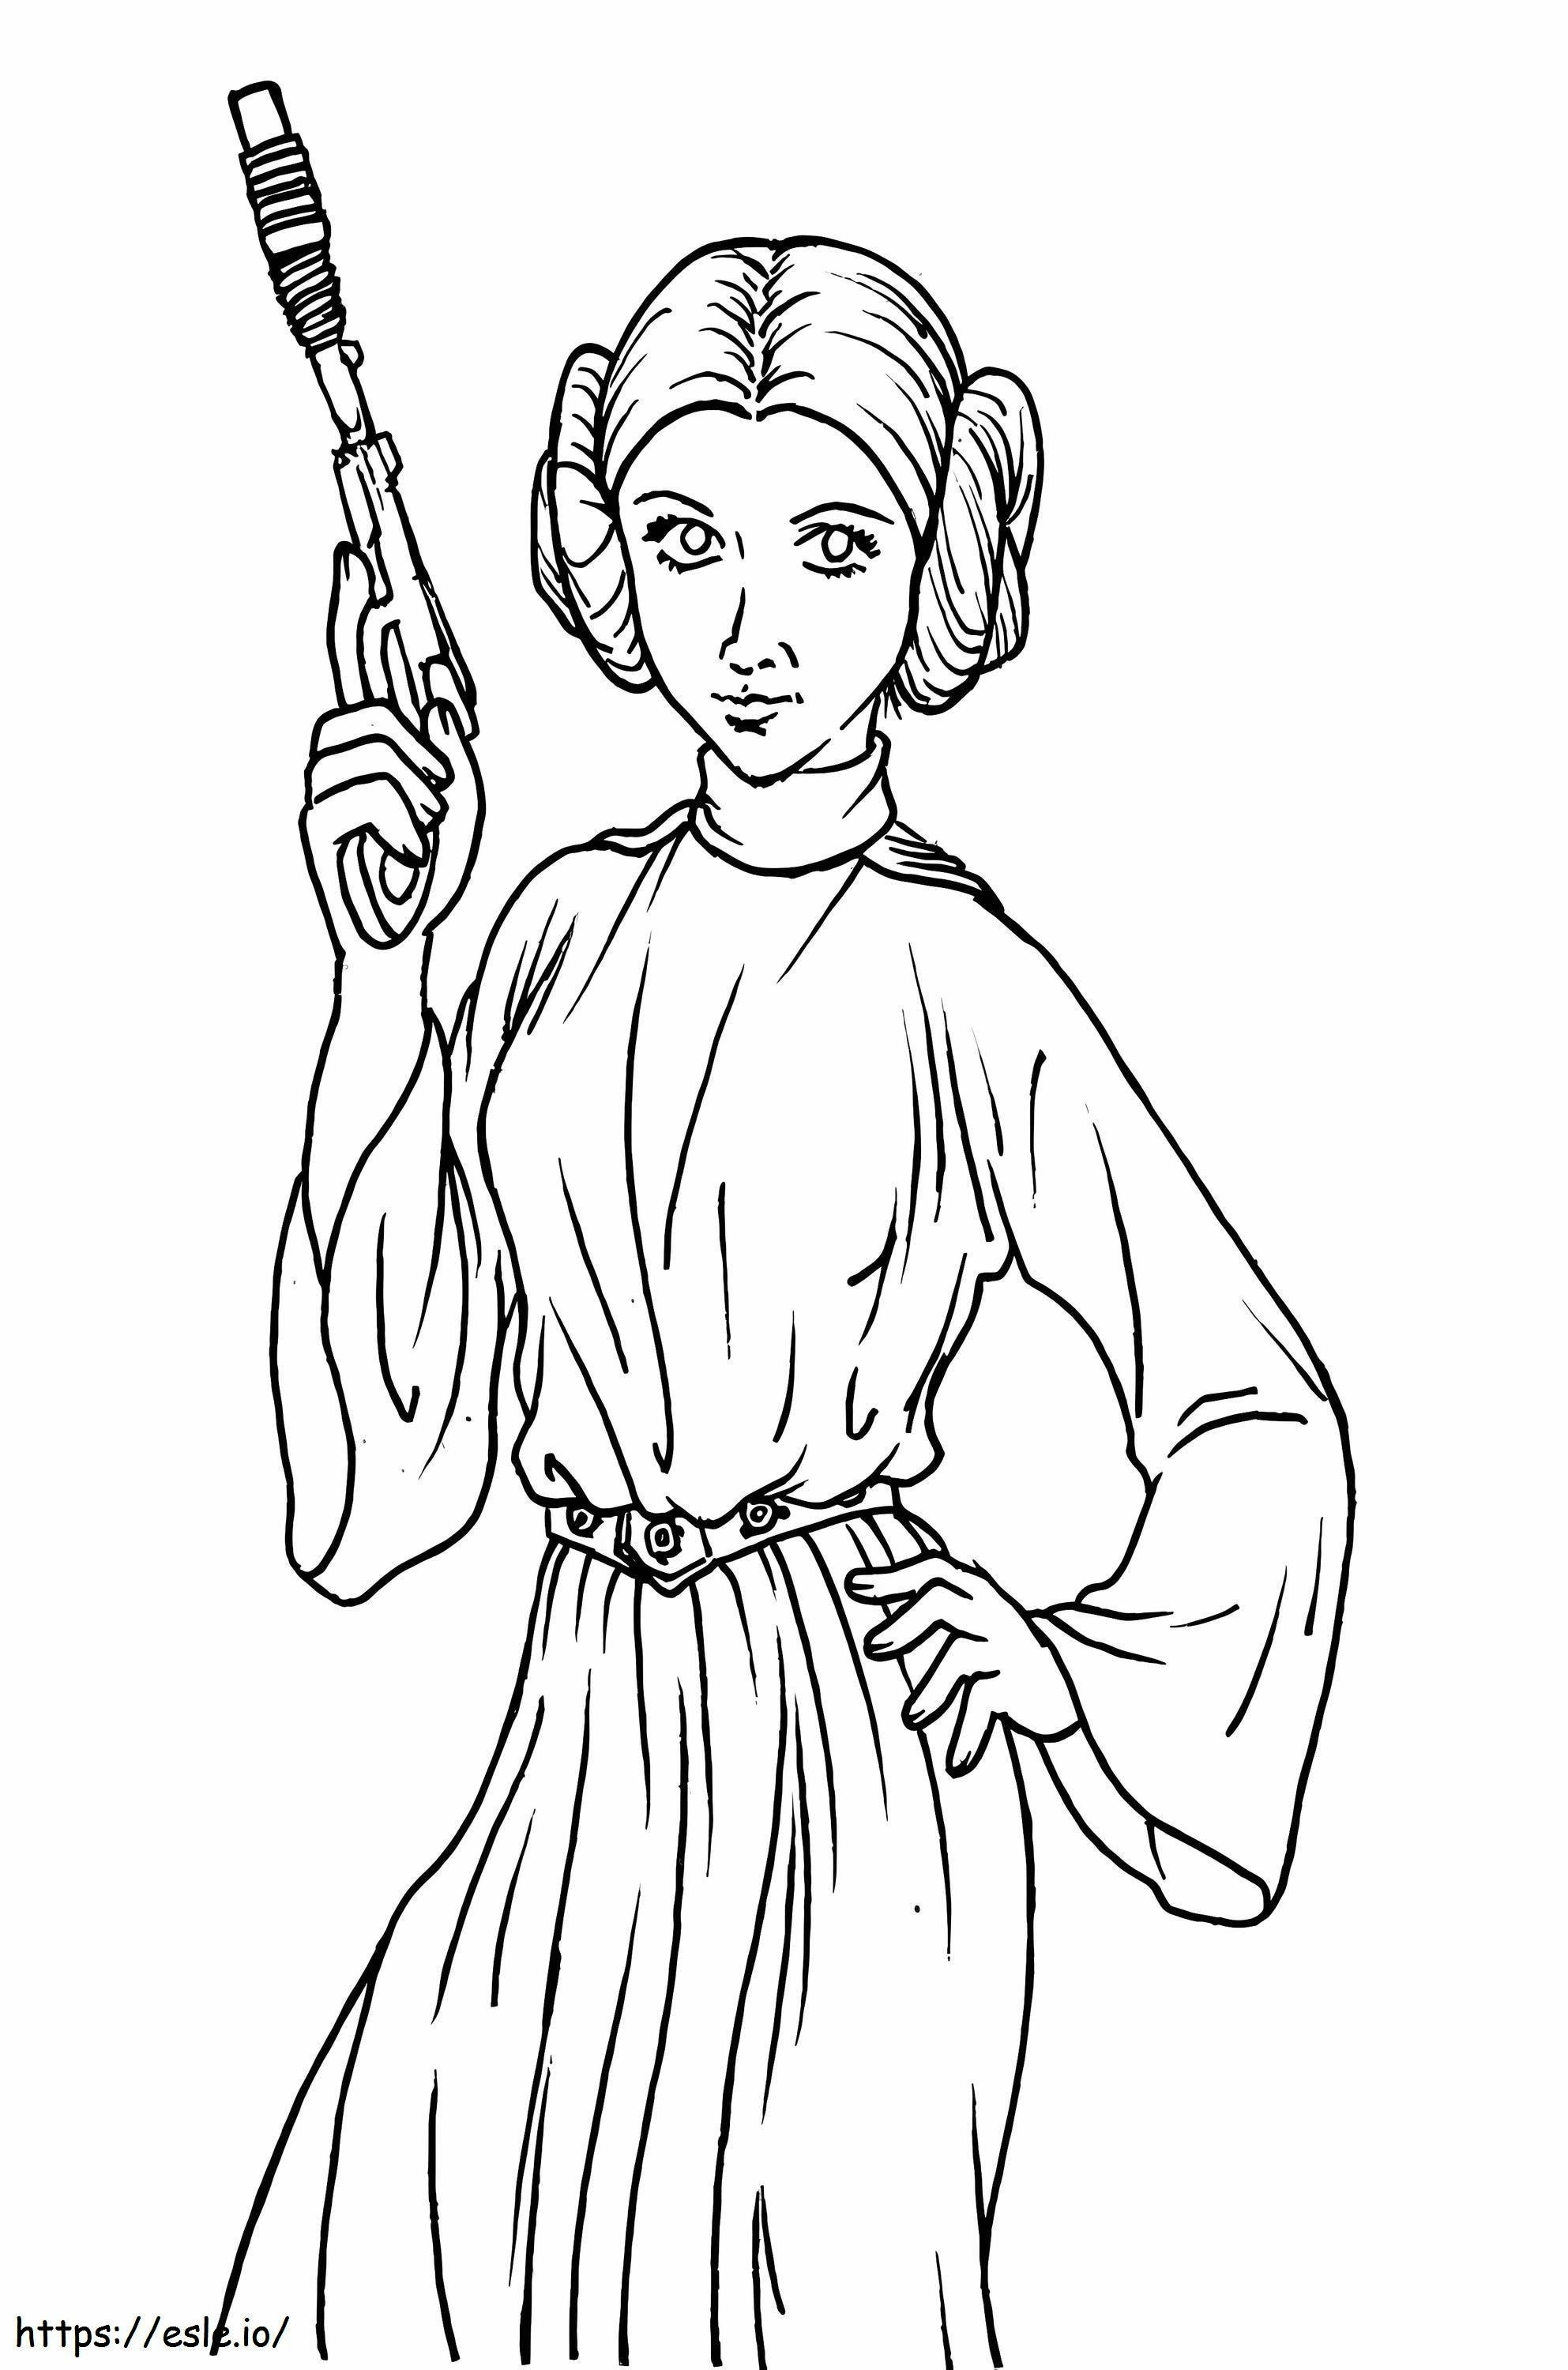 Genial princesa Leia para colorear